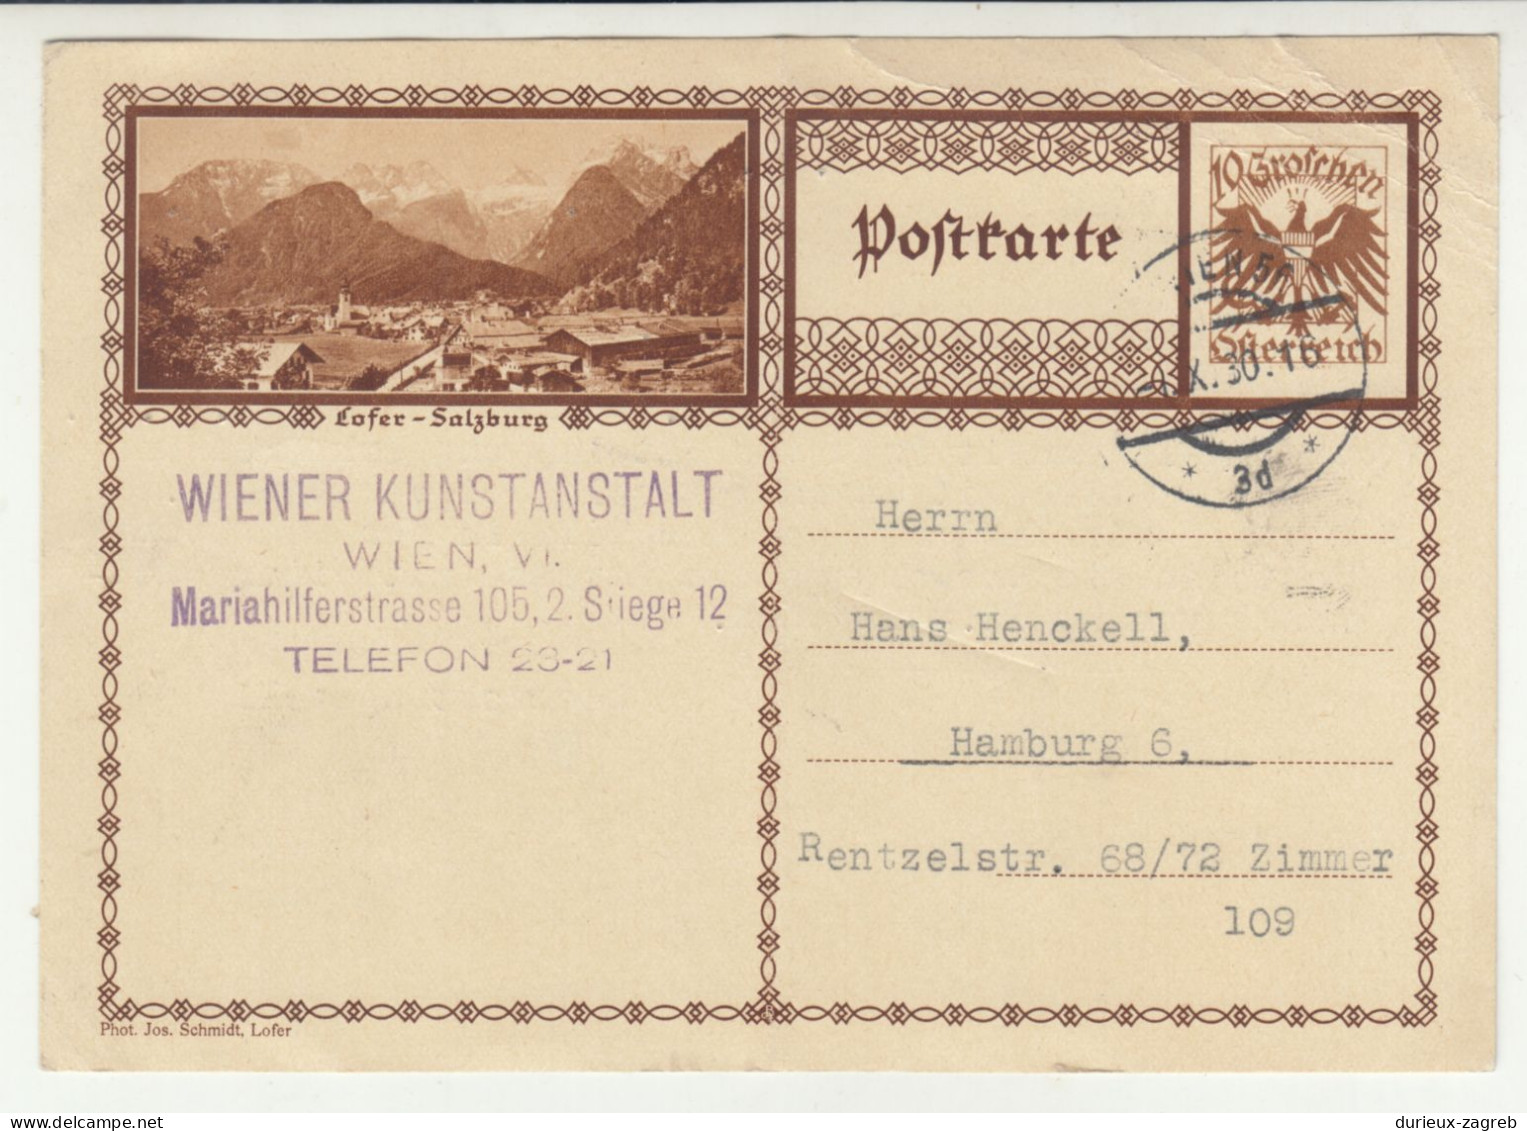 Lofer-Salzburg Illustrated Postal Stationery Postcard Posted 1930 B240503 - Tarjetas